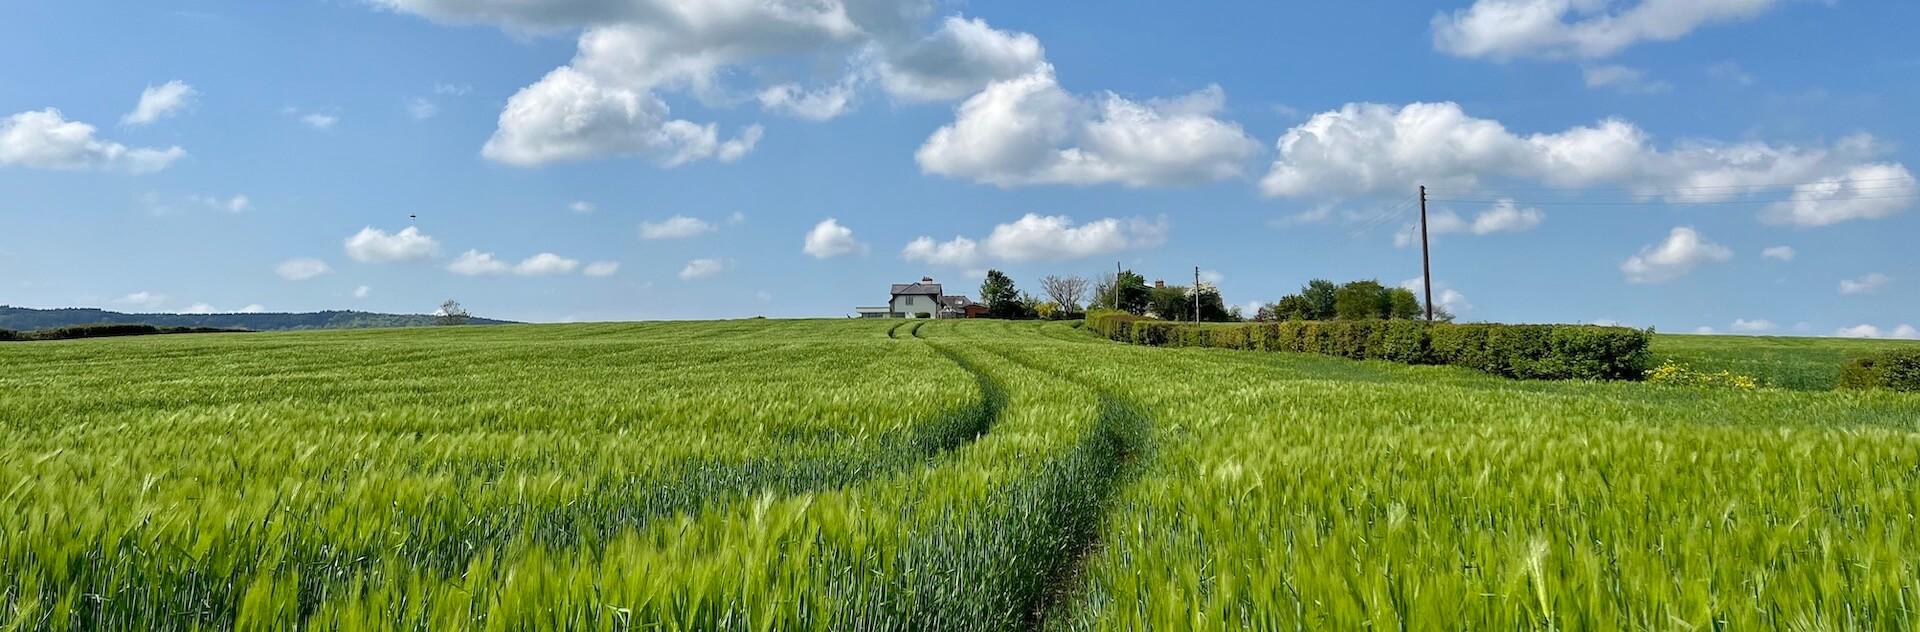 Barley field path